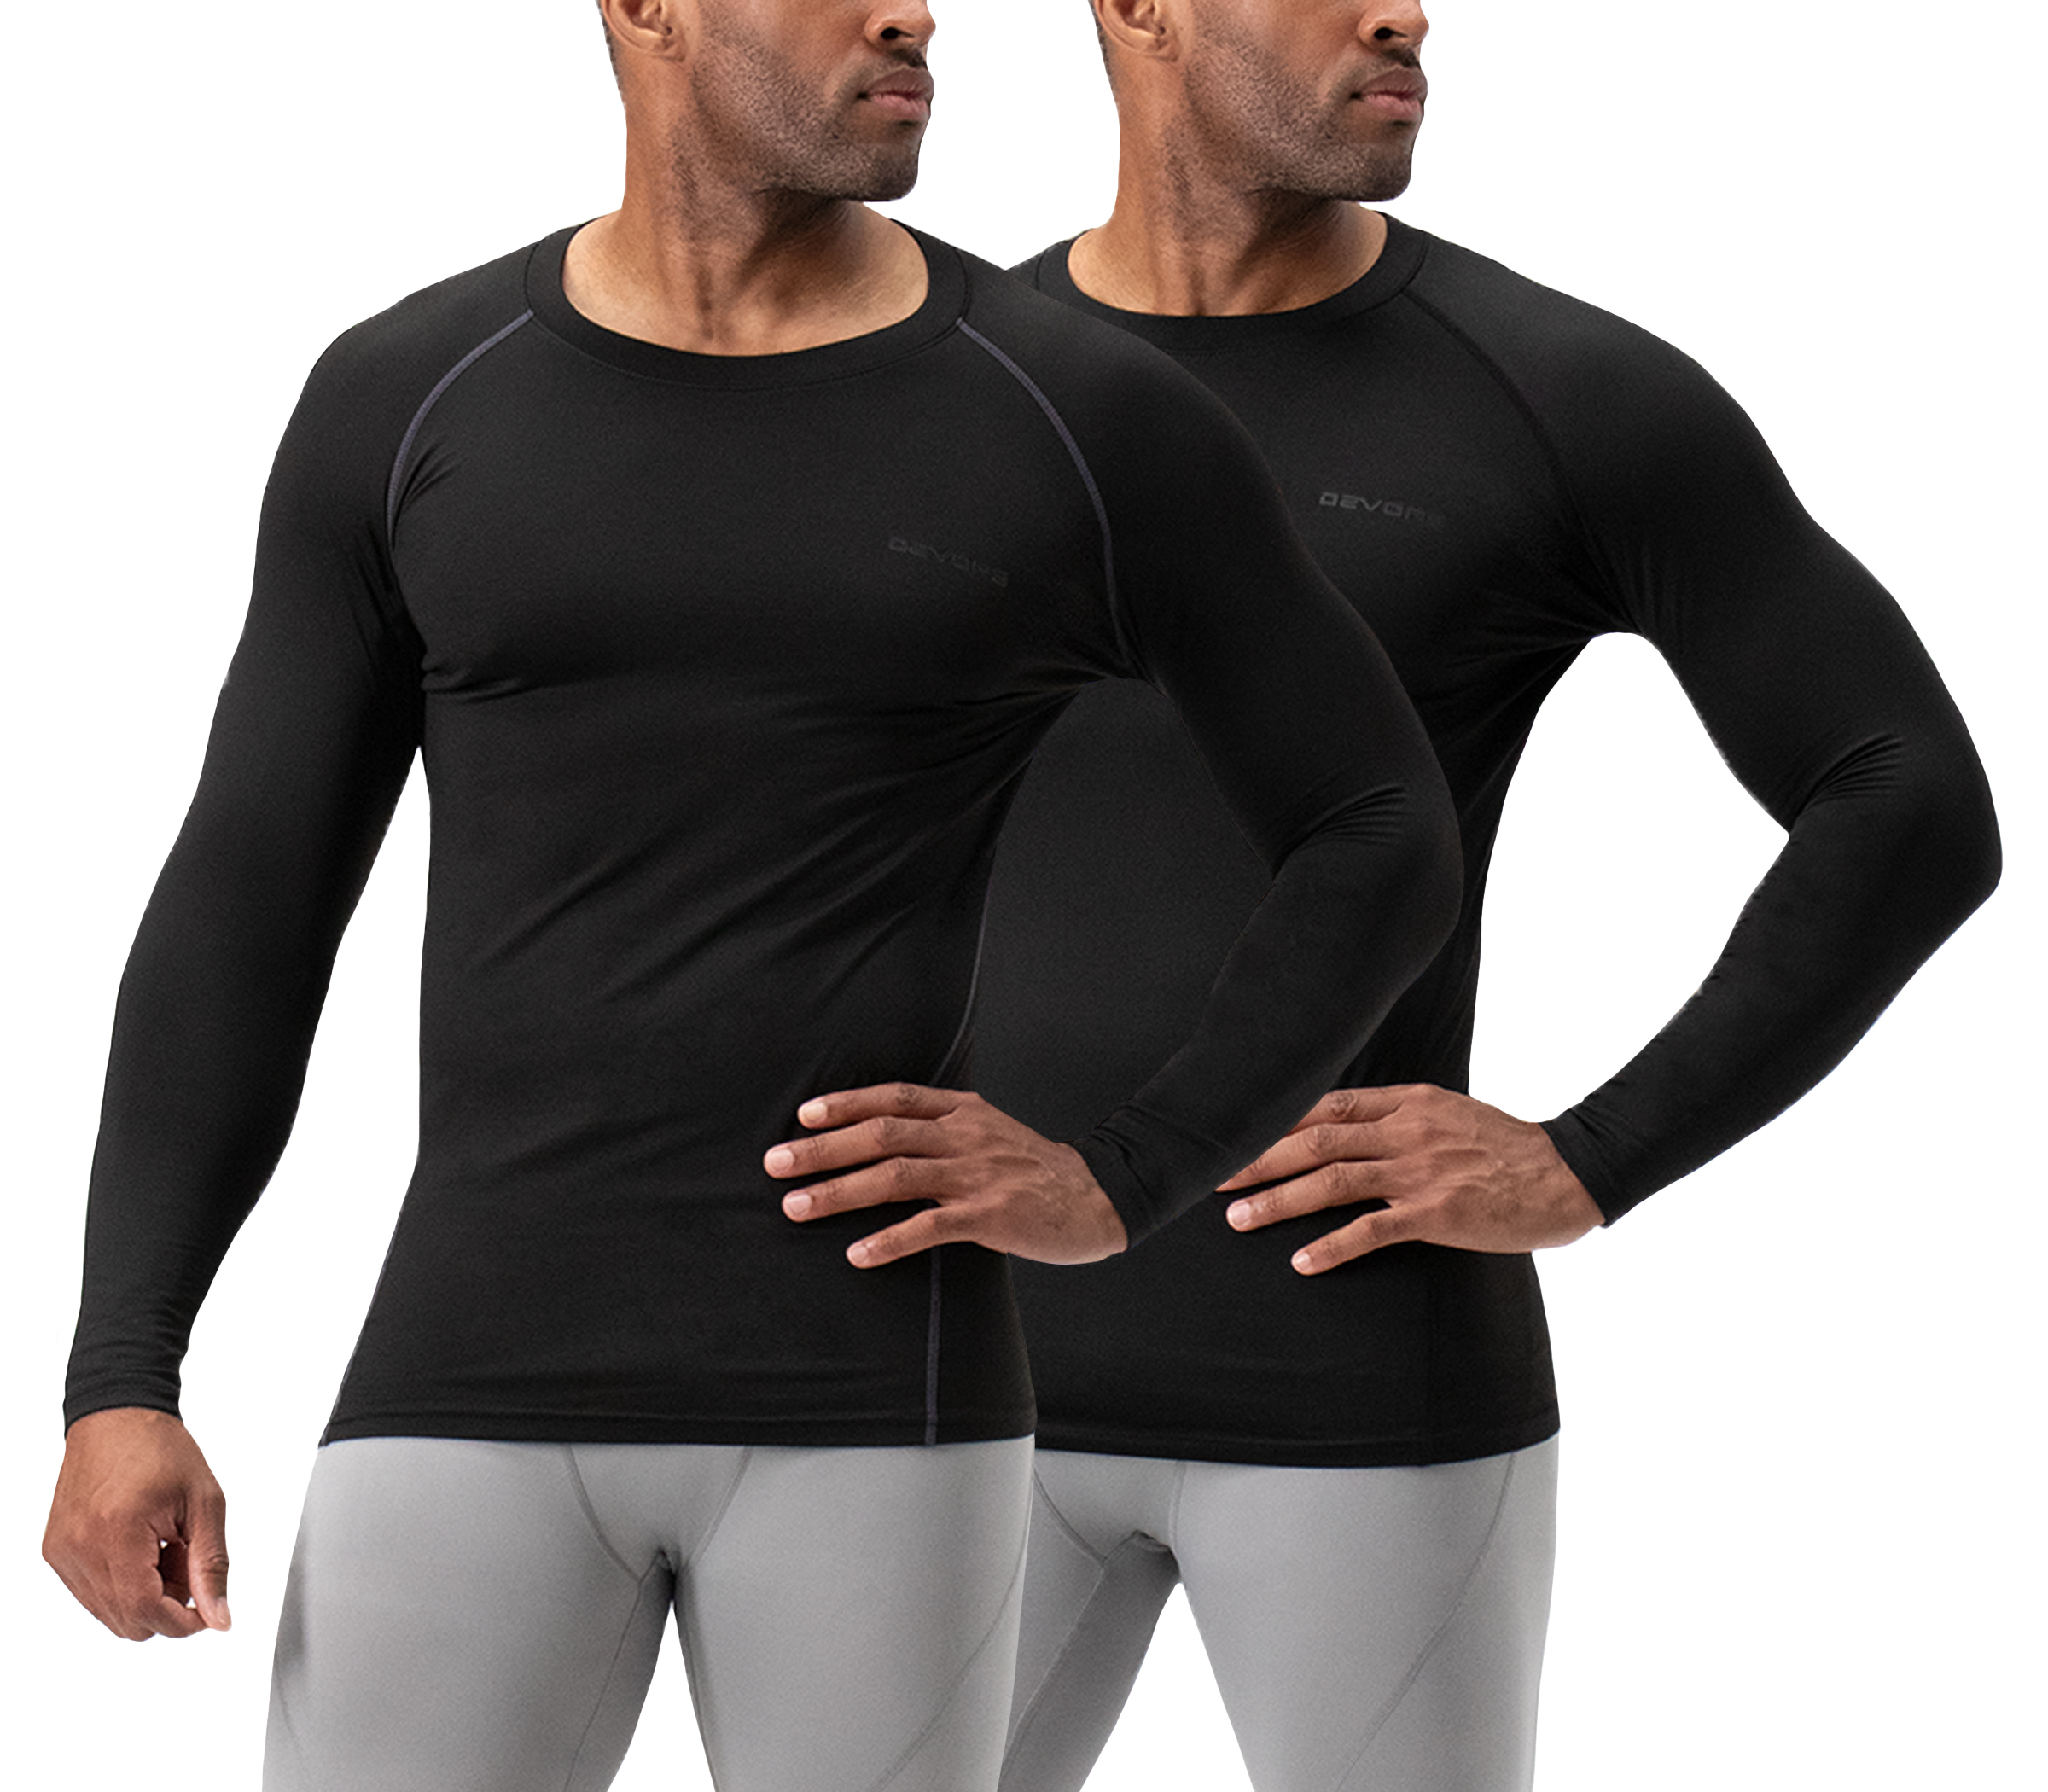 DEVOPS 2 Pack Men's Thermal long sleeve compression shirts (X-Large ...